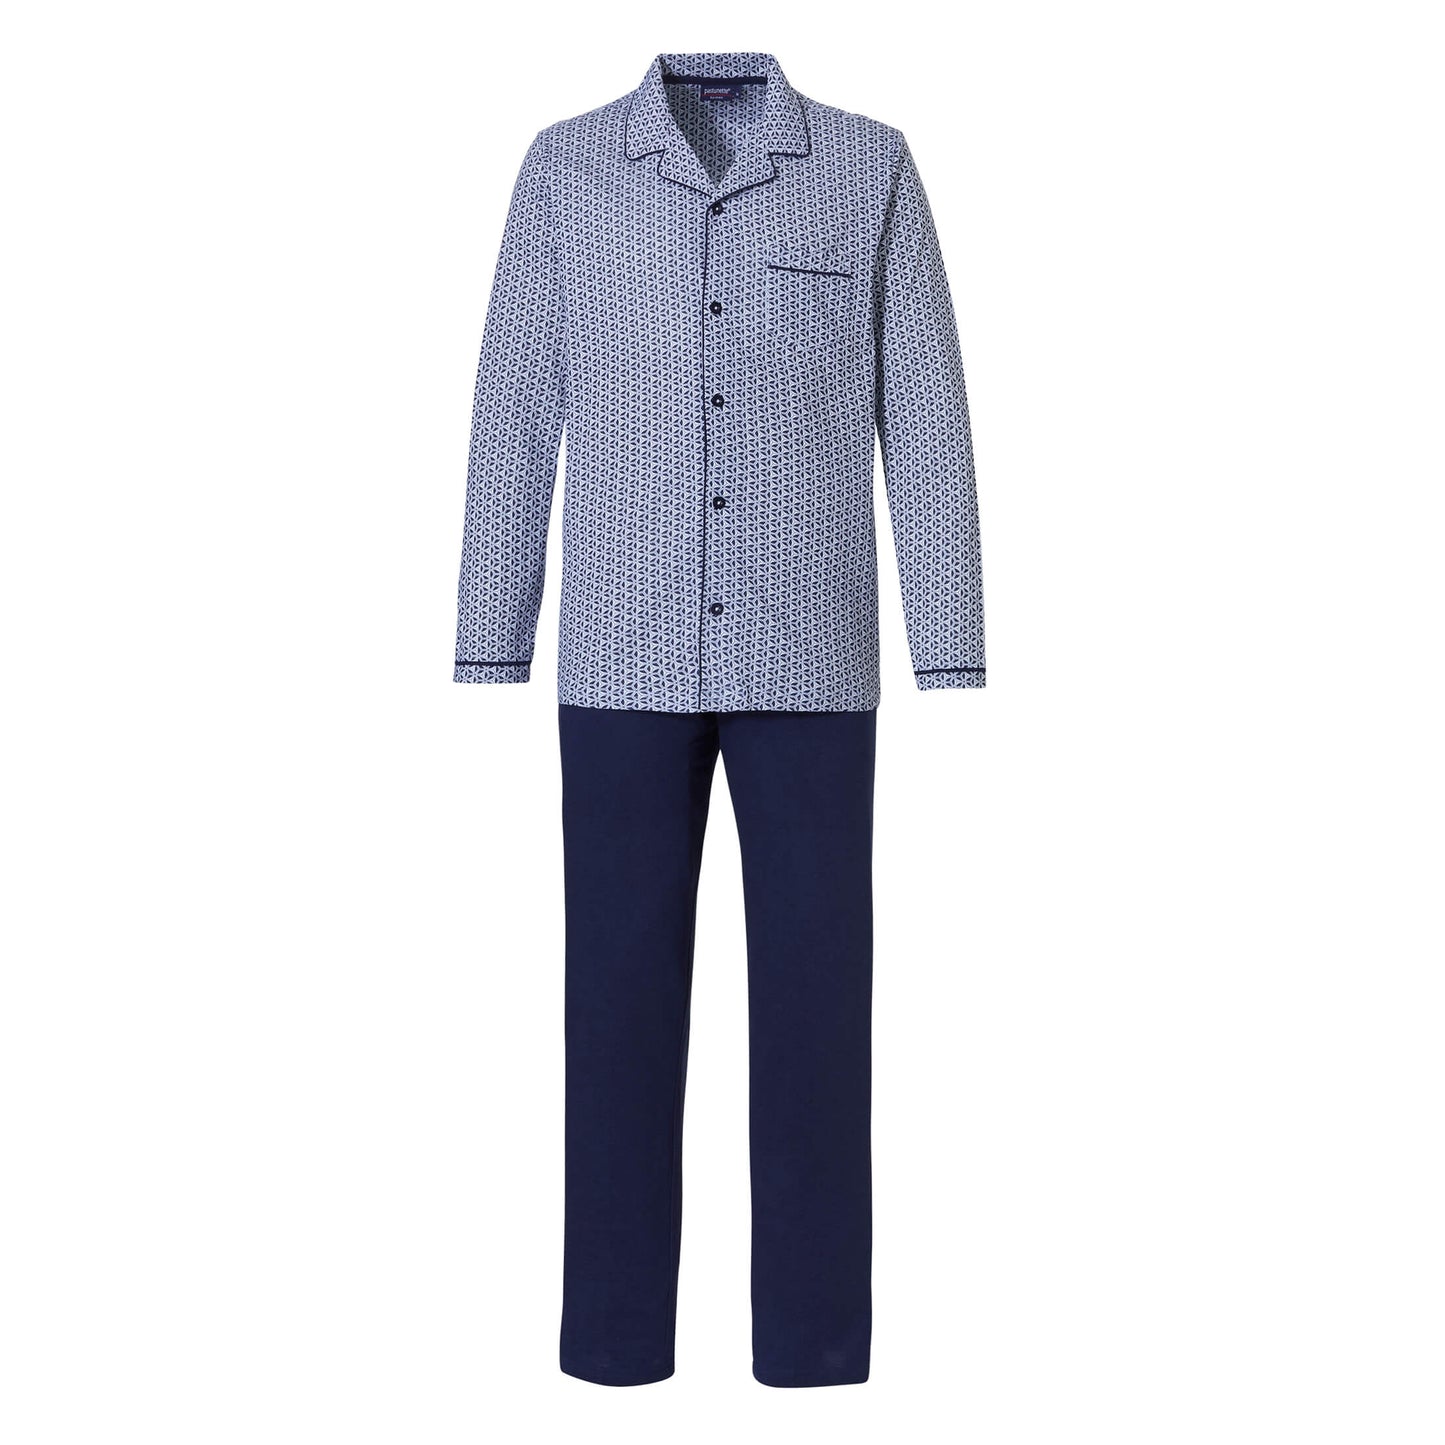 Pyjama with long pants straight leg 23231-616-6 529 blue